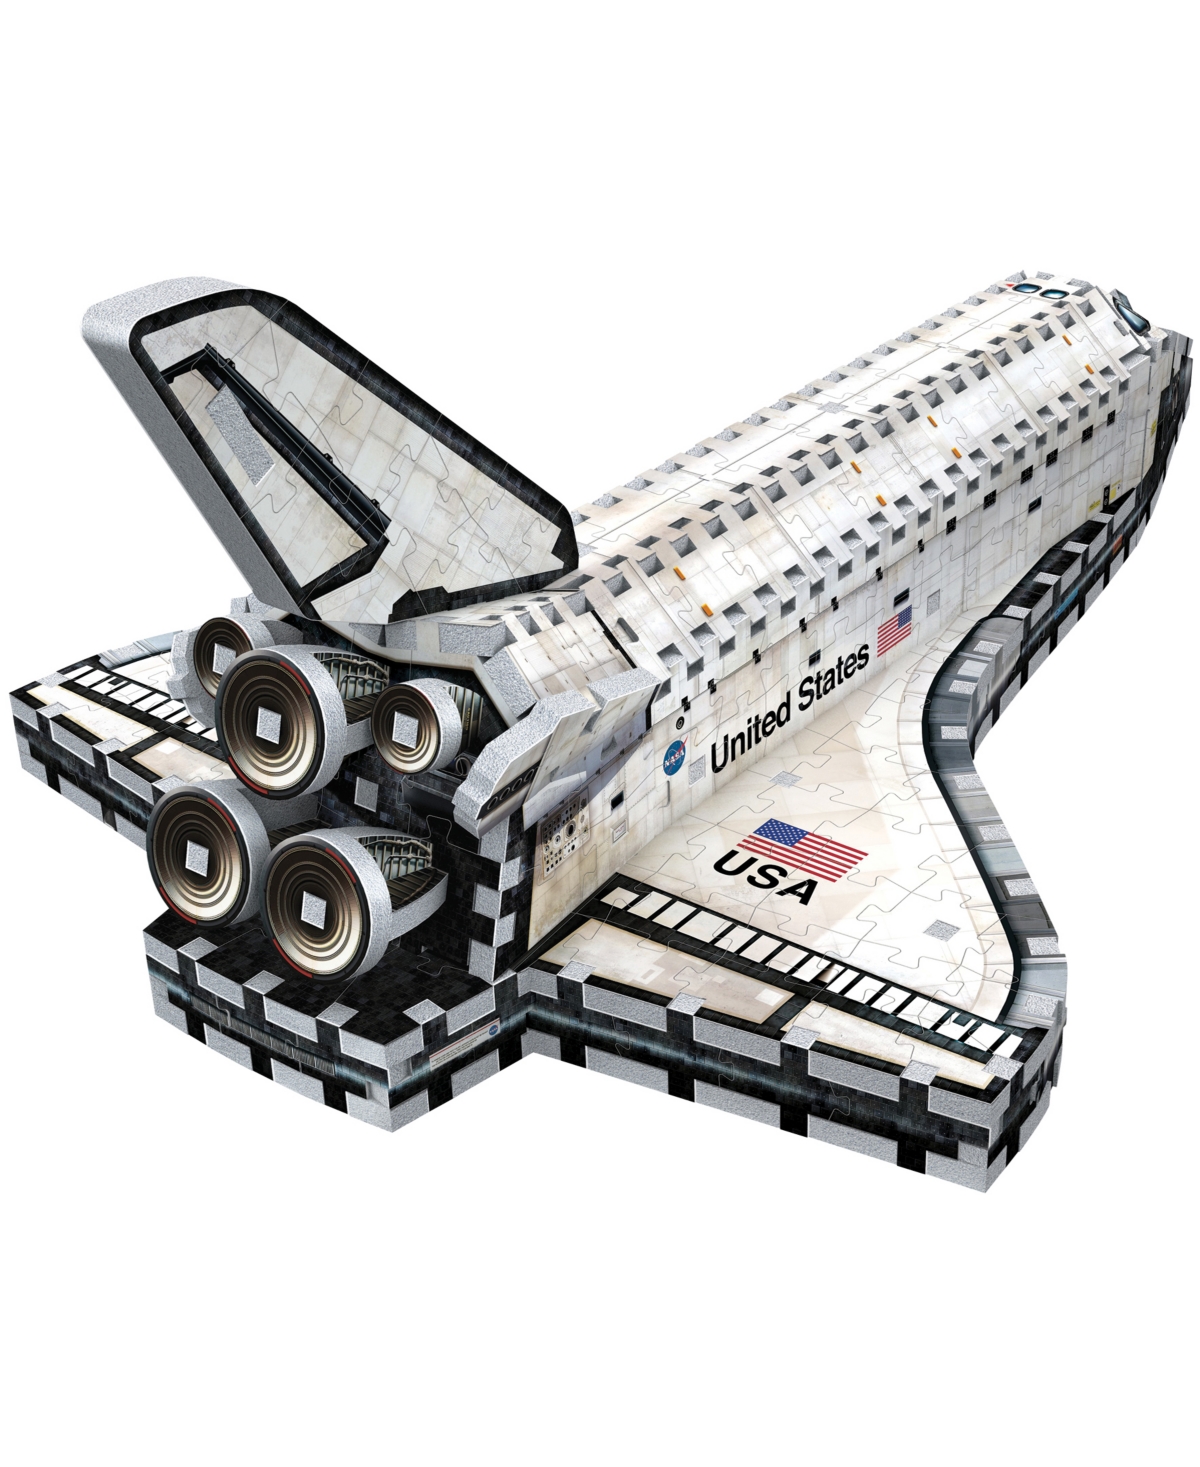 Shop Masterpieces Puzzles Wrebbit Space Shuttle Orbiter 3d Puzzle- 435 Pieces In White